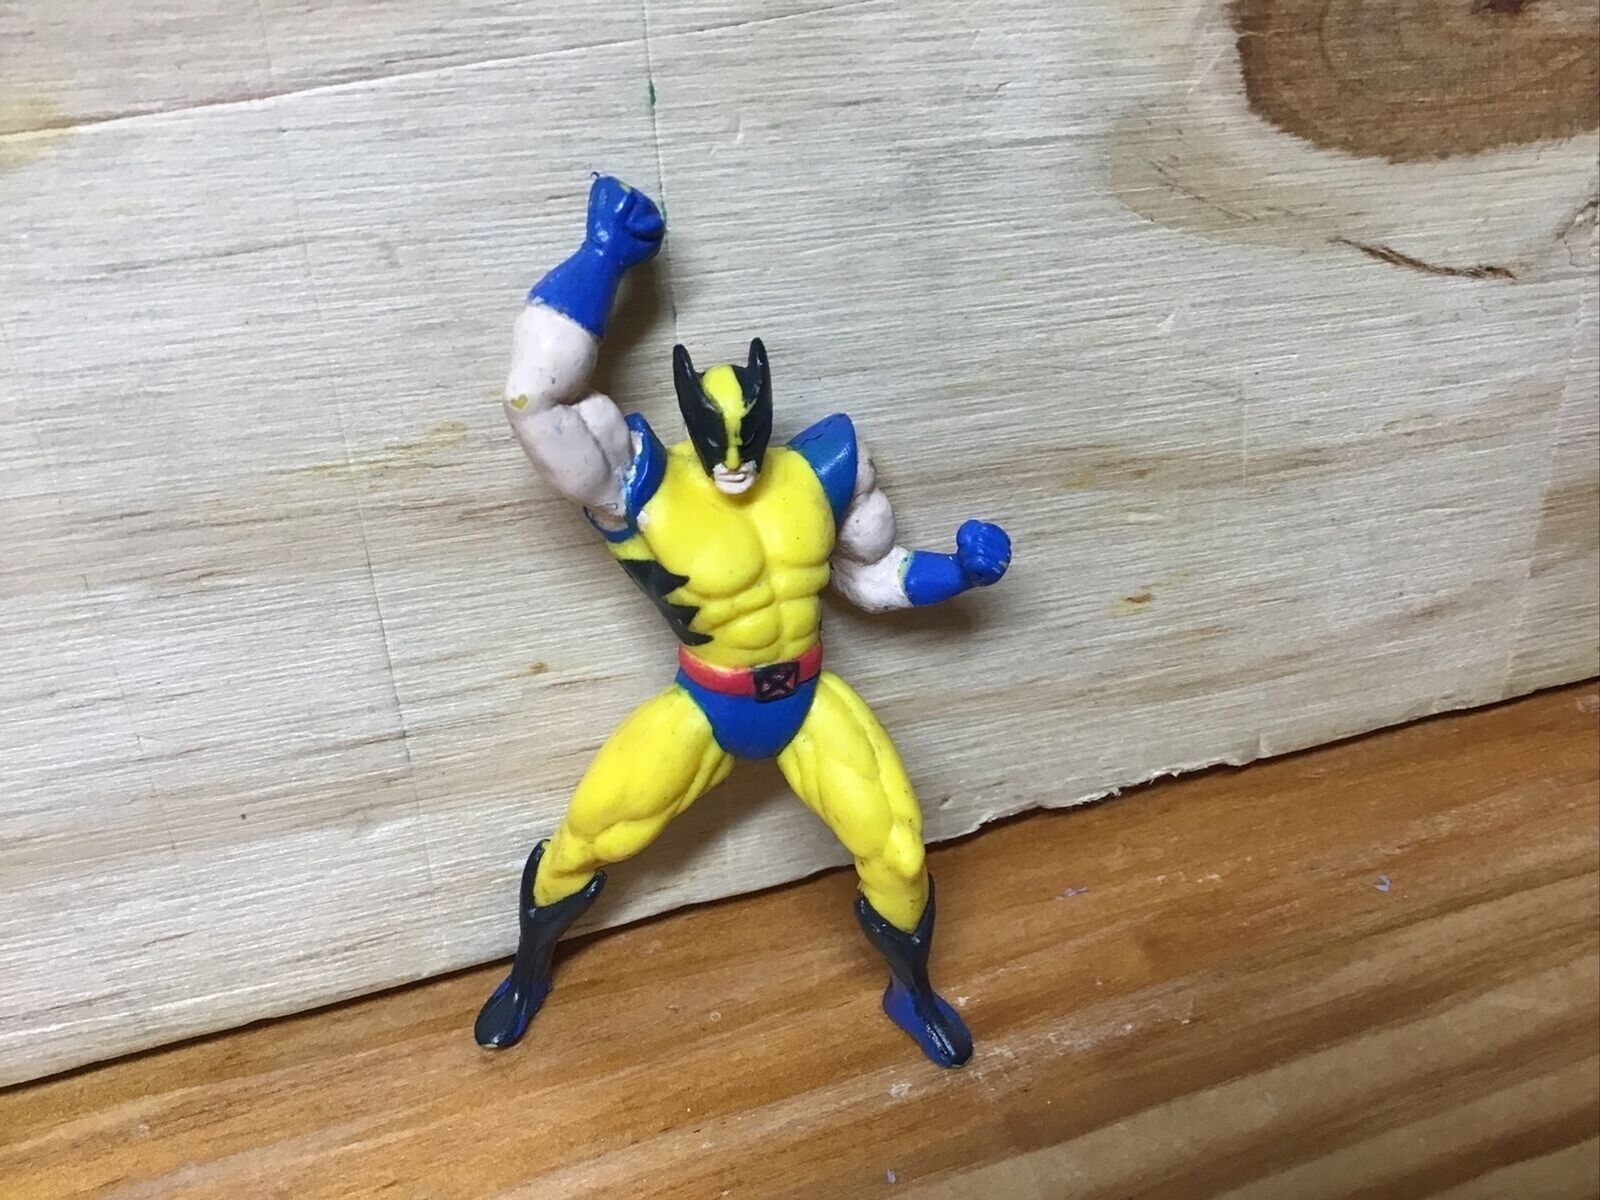 Marvel X-Men WOLVERINE Hardee's Fast Food Premium Action Figure Toy 1995  - $8.20